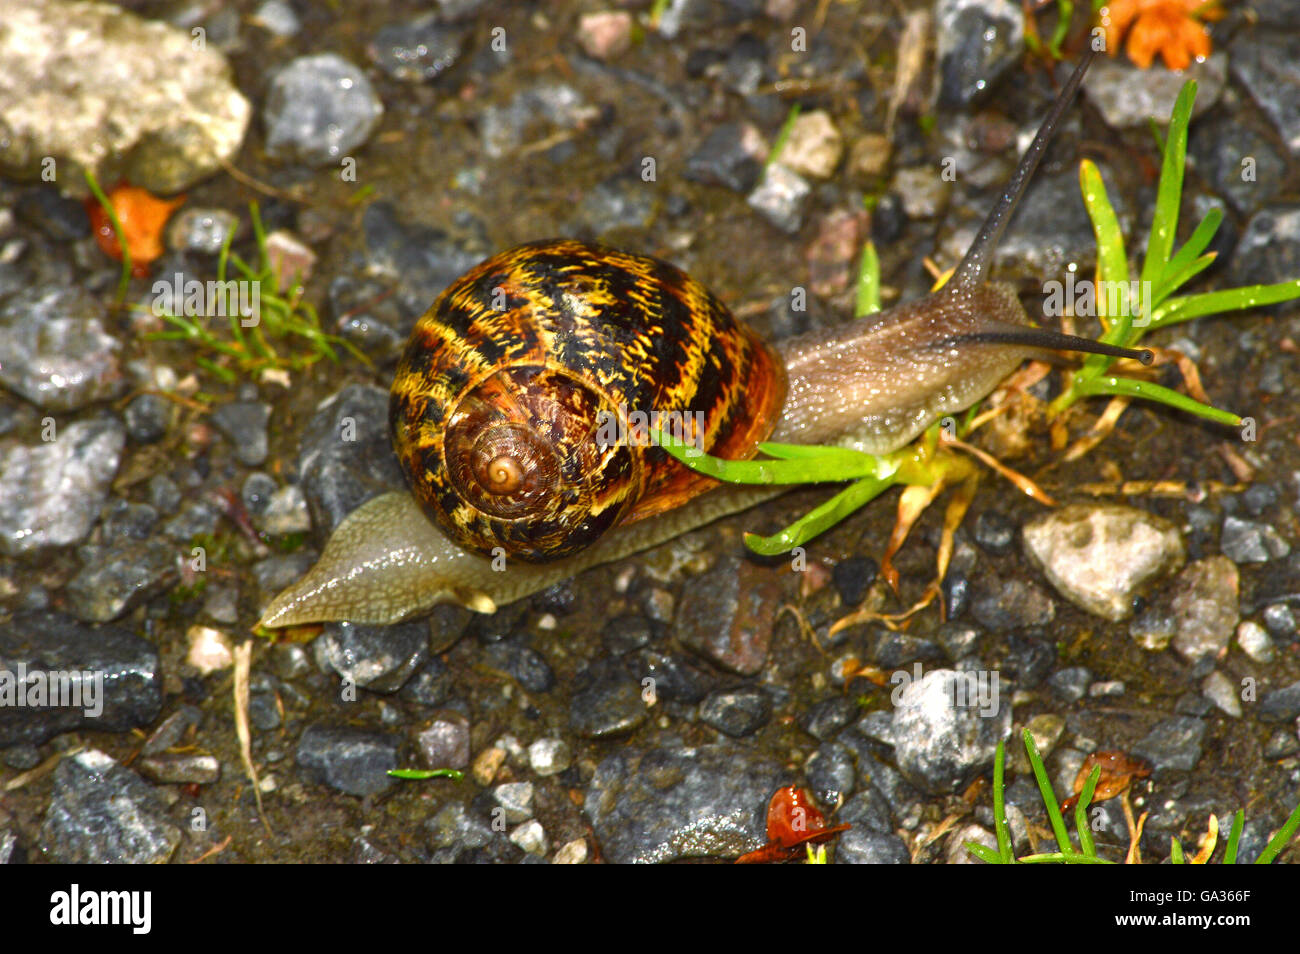 Common garden snail, cornu aspersum, Helicidae family Stock Photo